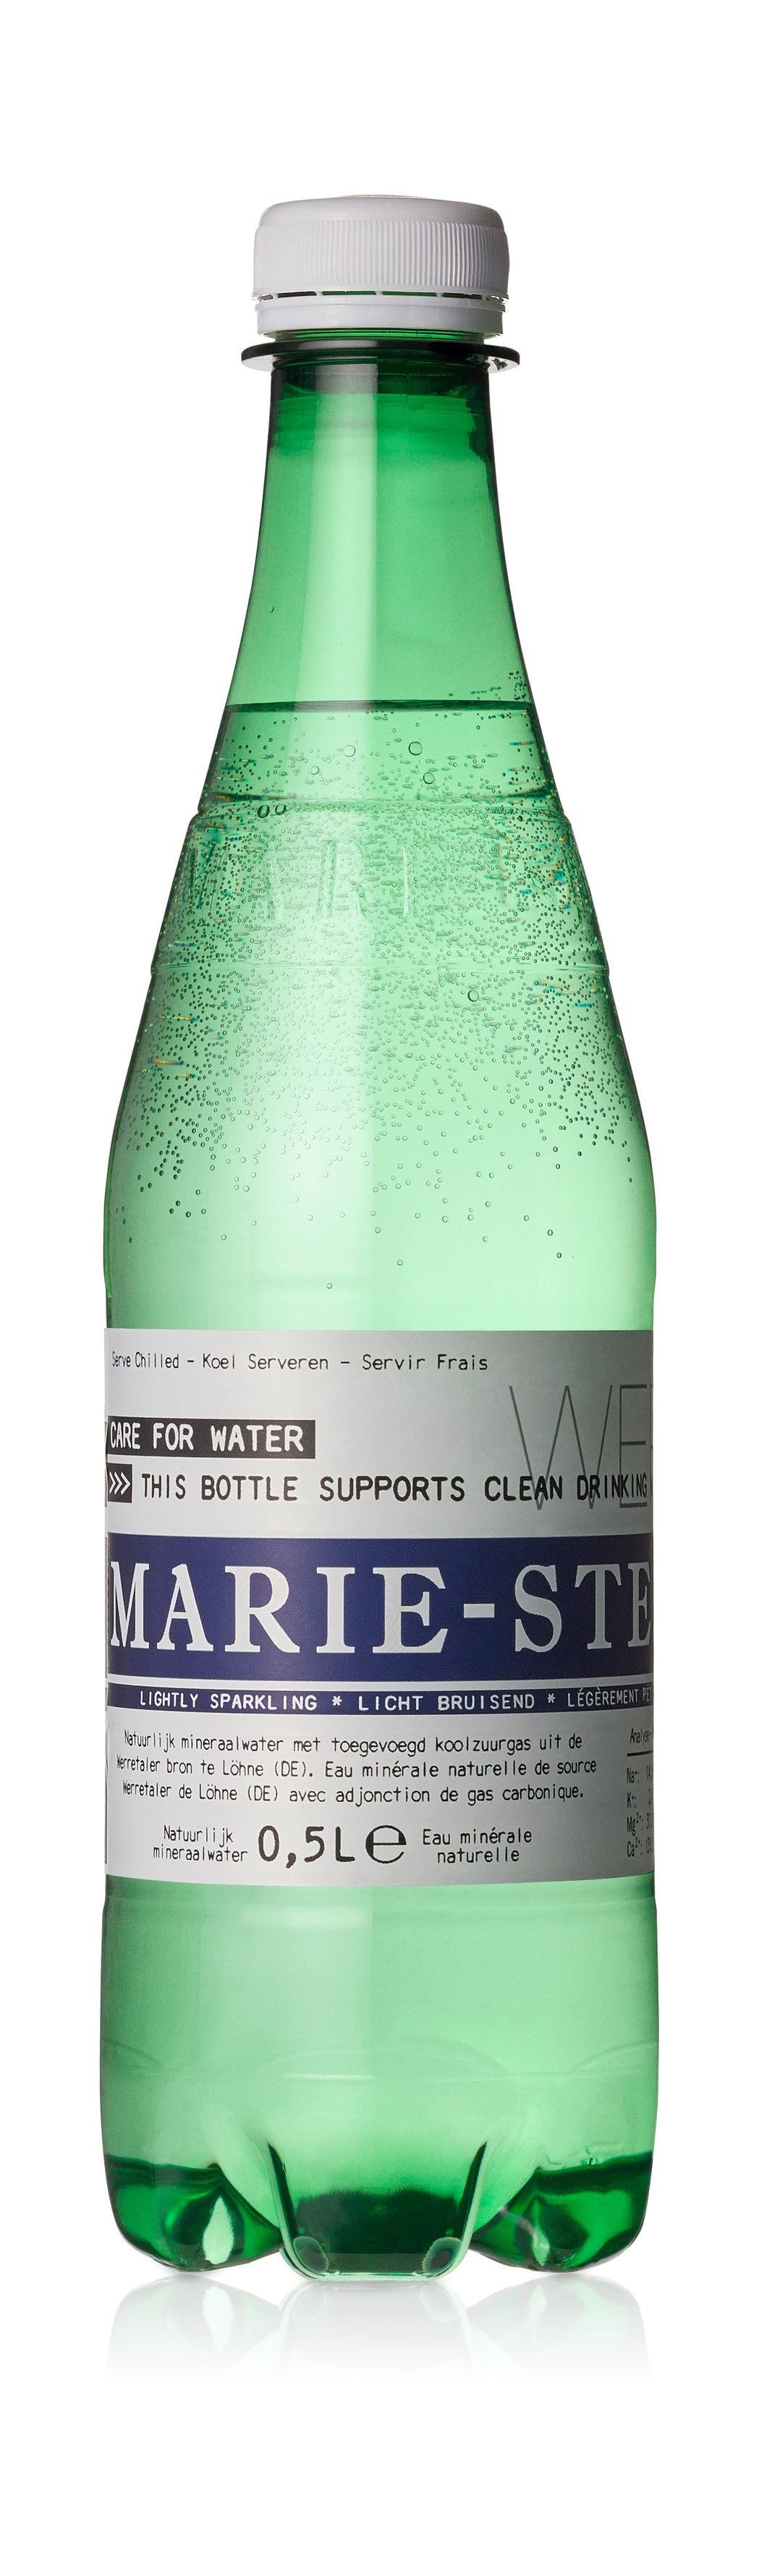 MARIE-STELLA-MARIS Sparkling Water 50 cl PET